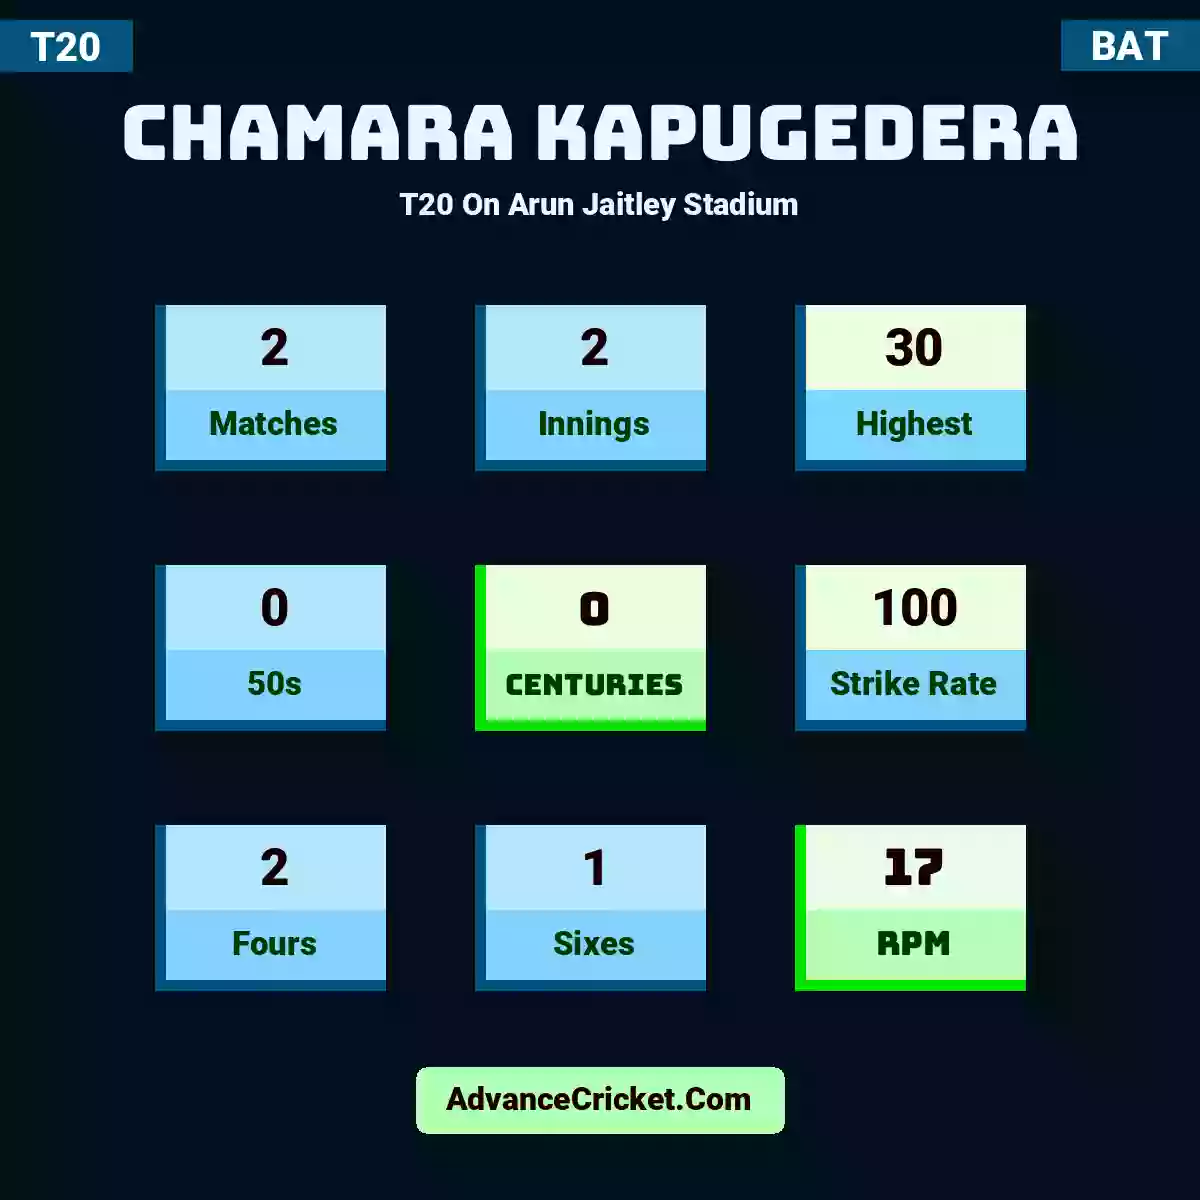 Chamara Kapugedera T20  On Arun Jaitley Stadium, Chamara Kapugedera played 2 matches, scored 30 runs as highest, 0 half-centuries, and 0 centuries, with a strike rate of 100. C.Kapugedera hit 2 fours and 1 sixes, with an RPM of 17.